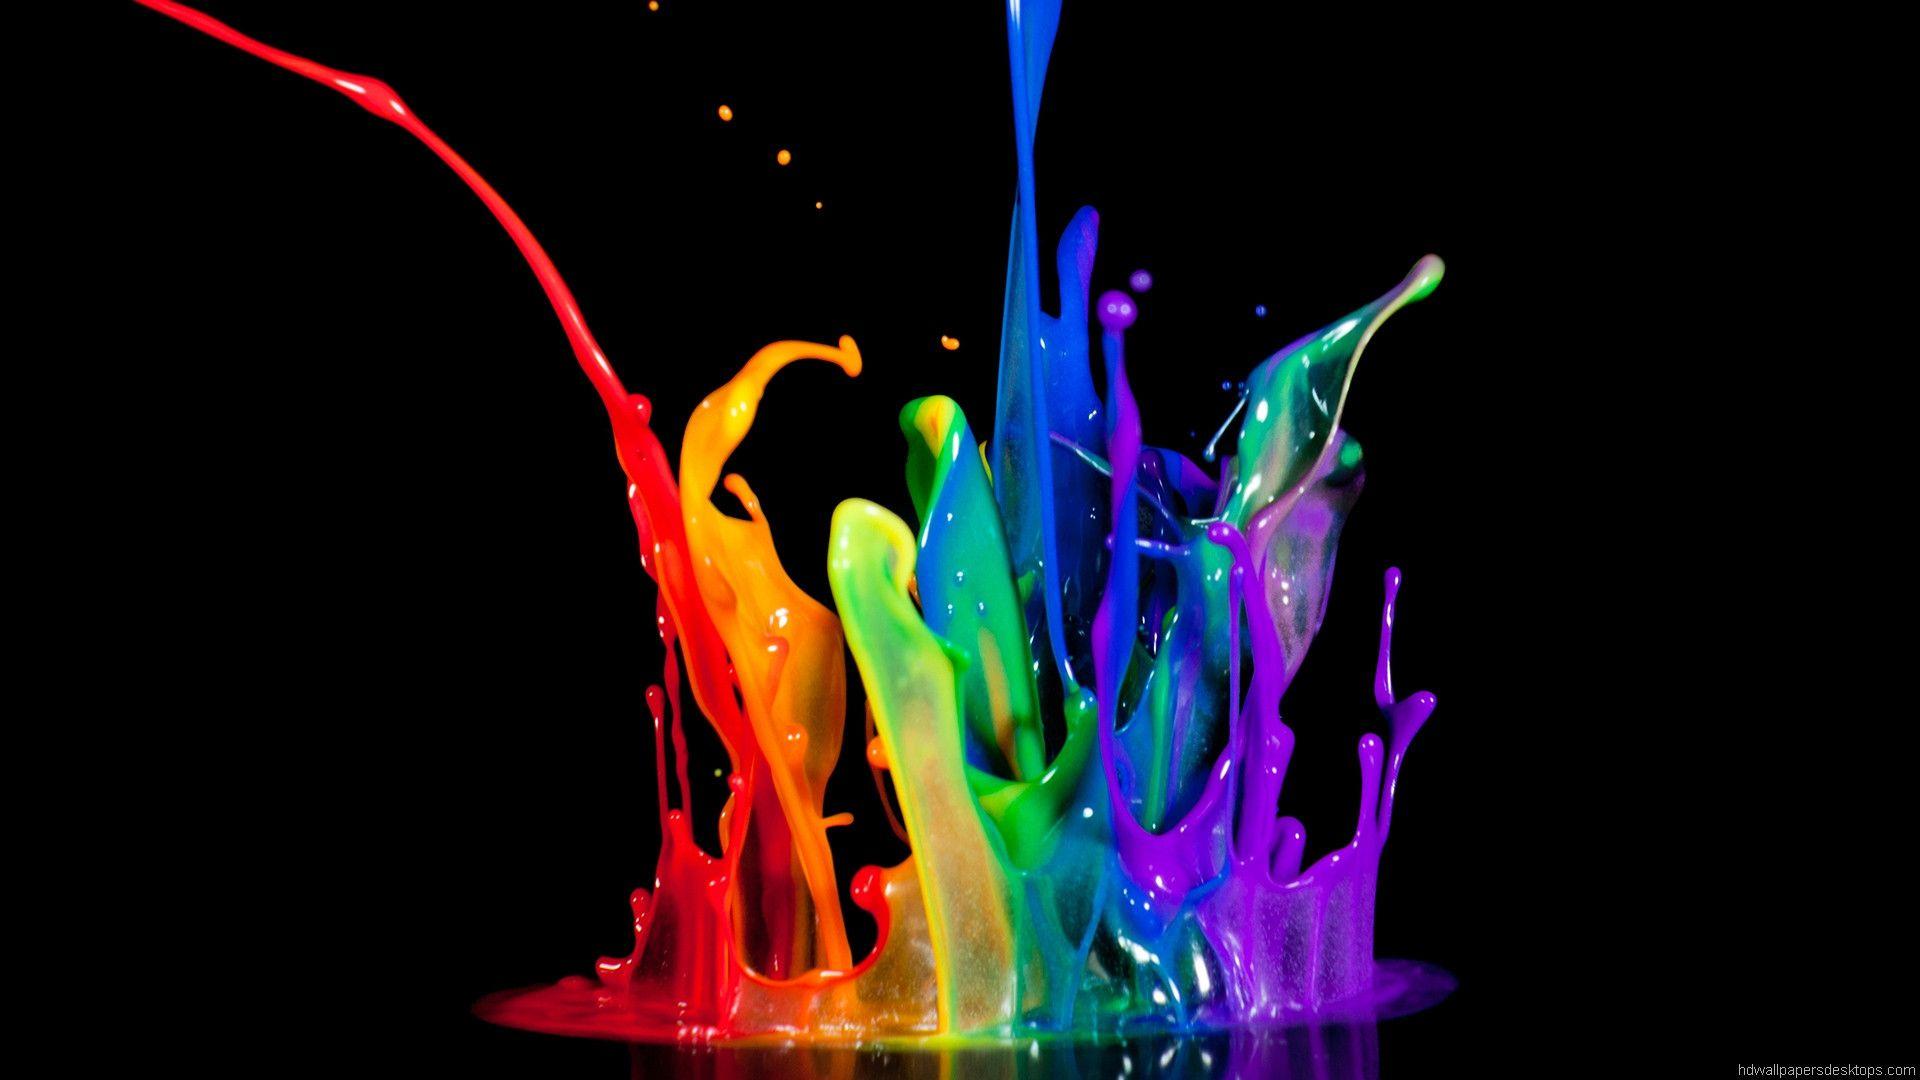 Color Wallpaper For Desktop Wallpaper. lookwallpaper